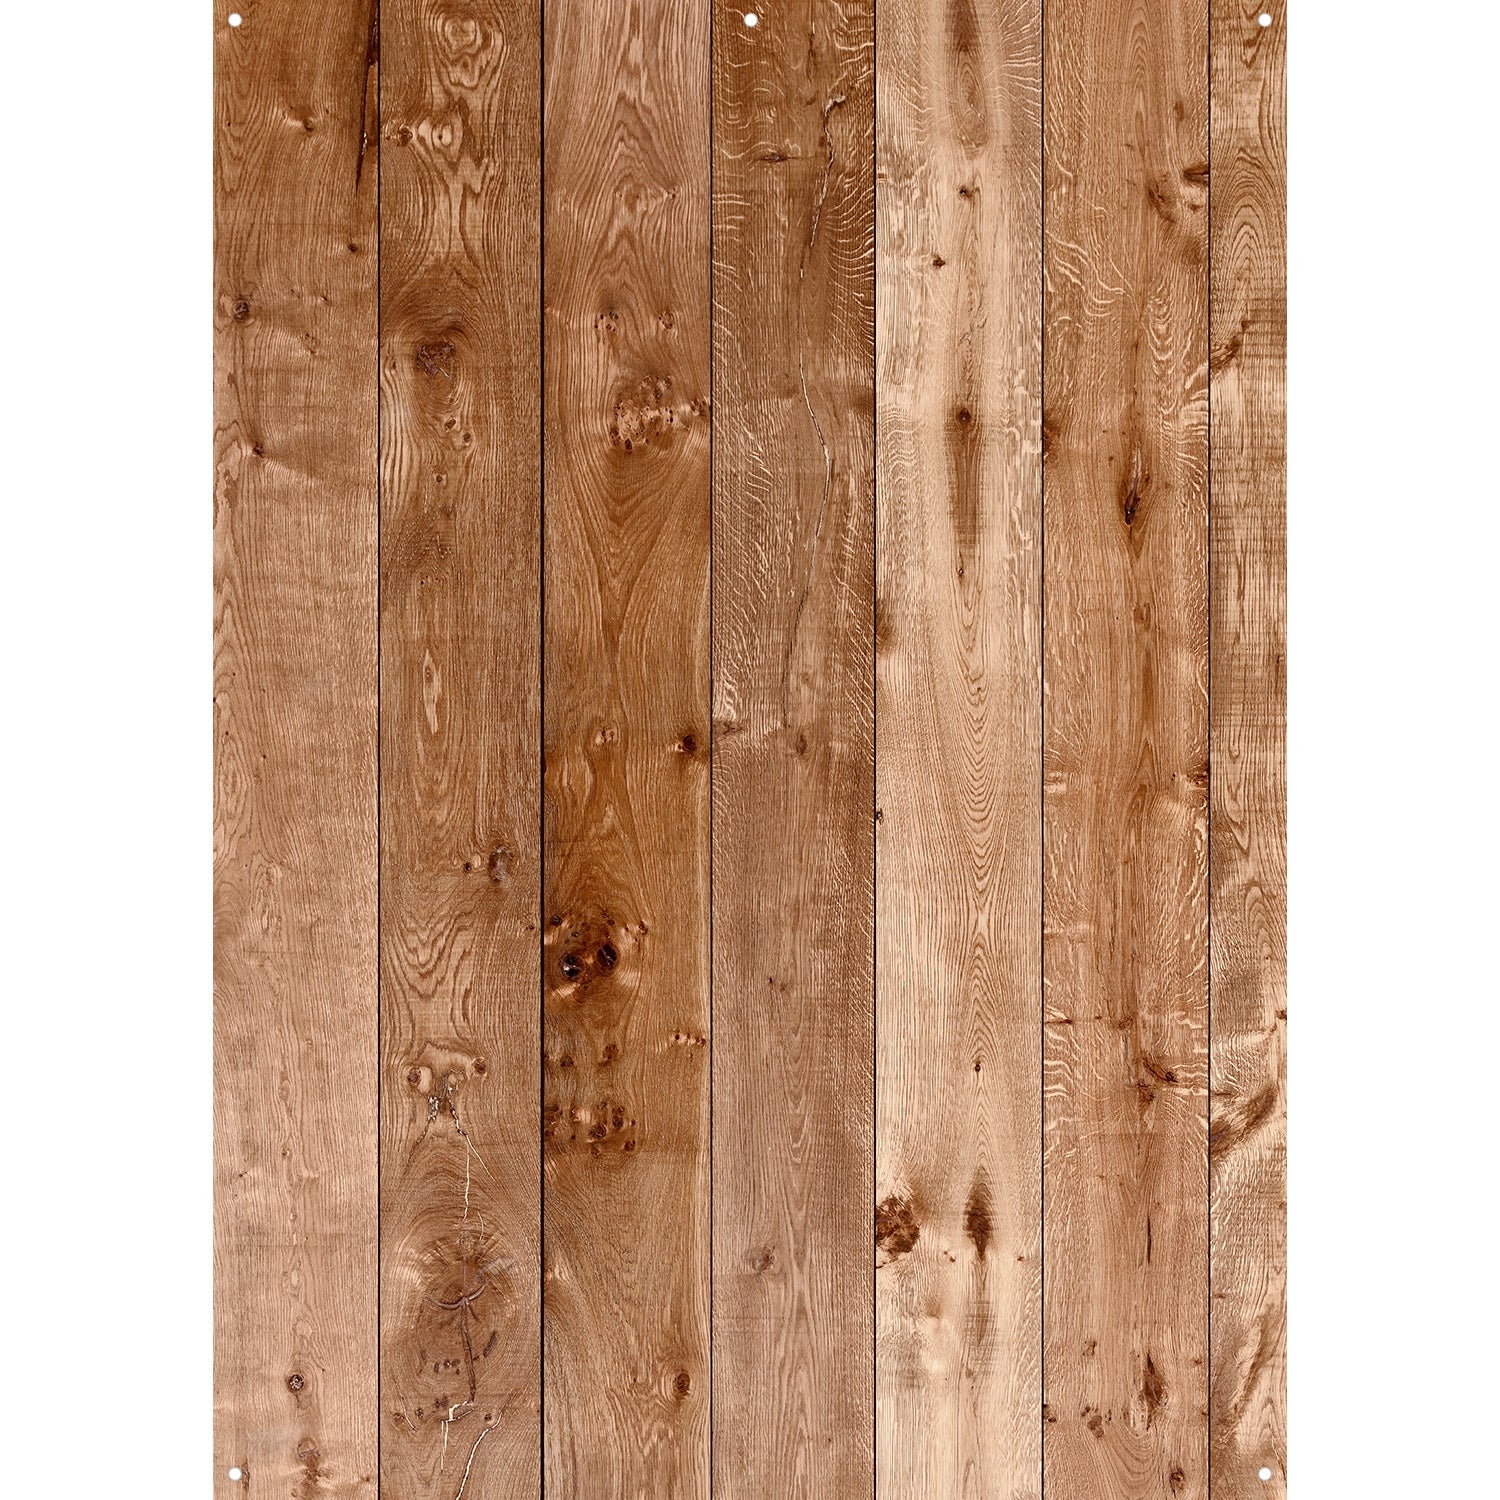 D0057 - X-Drop Backdrop – Maple Wood Plank Panels (5' x 7')